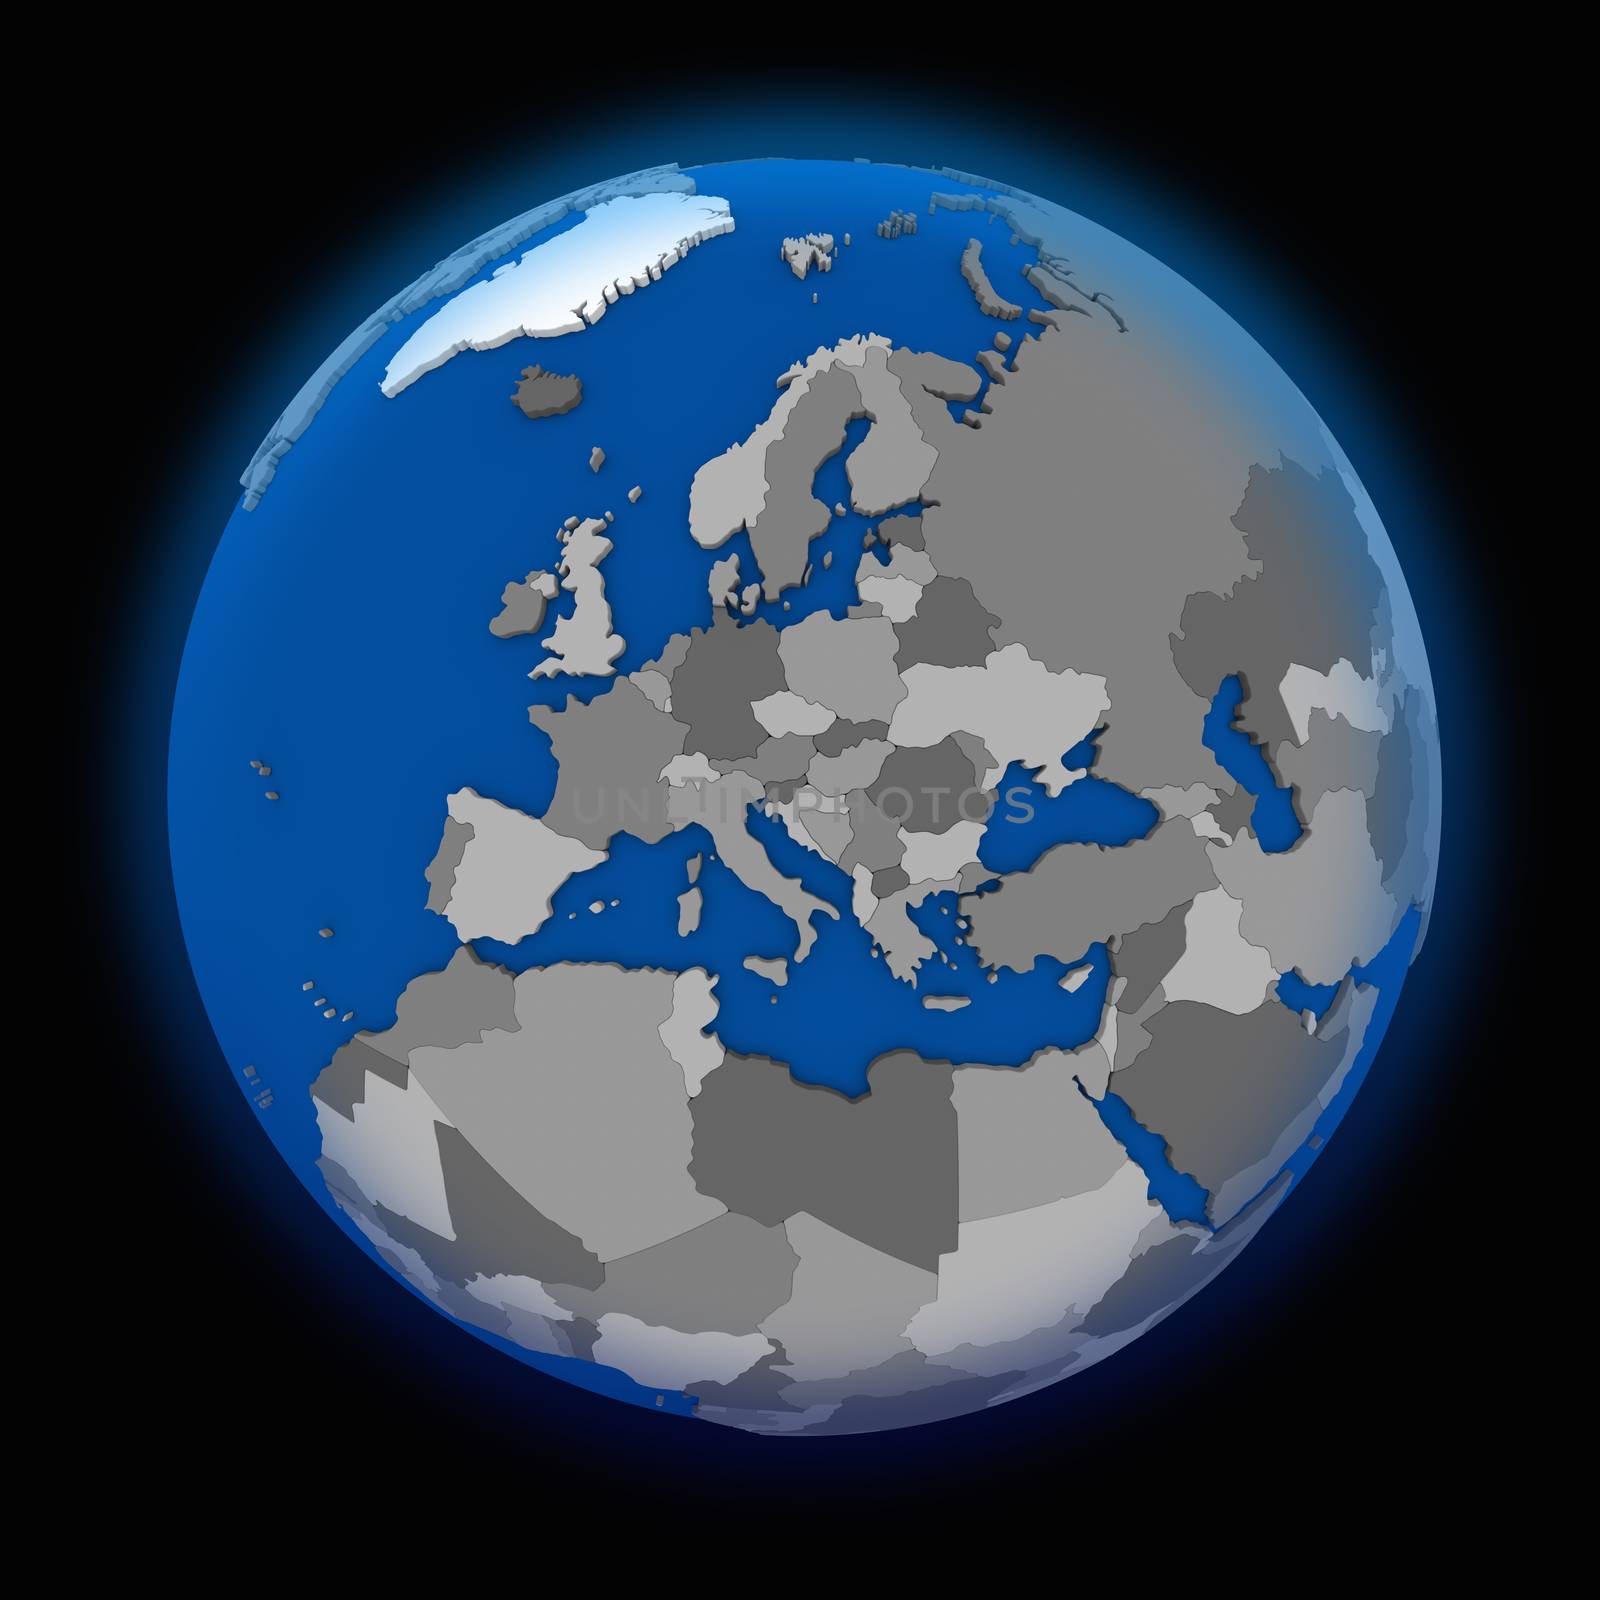 Europe on political globe on black background